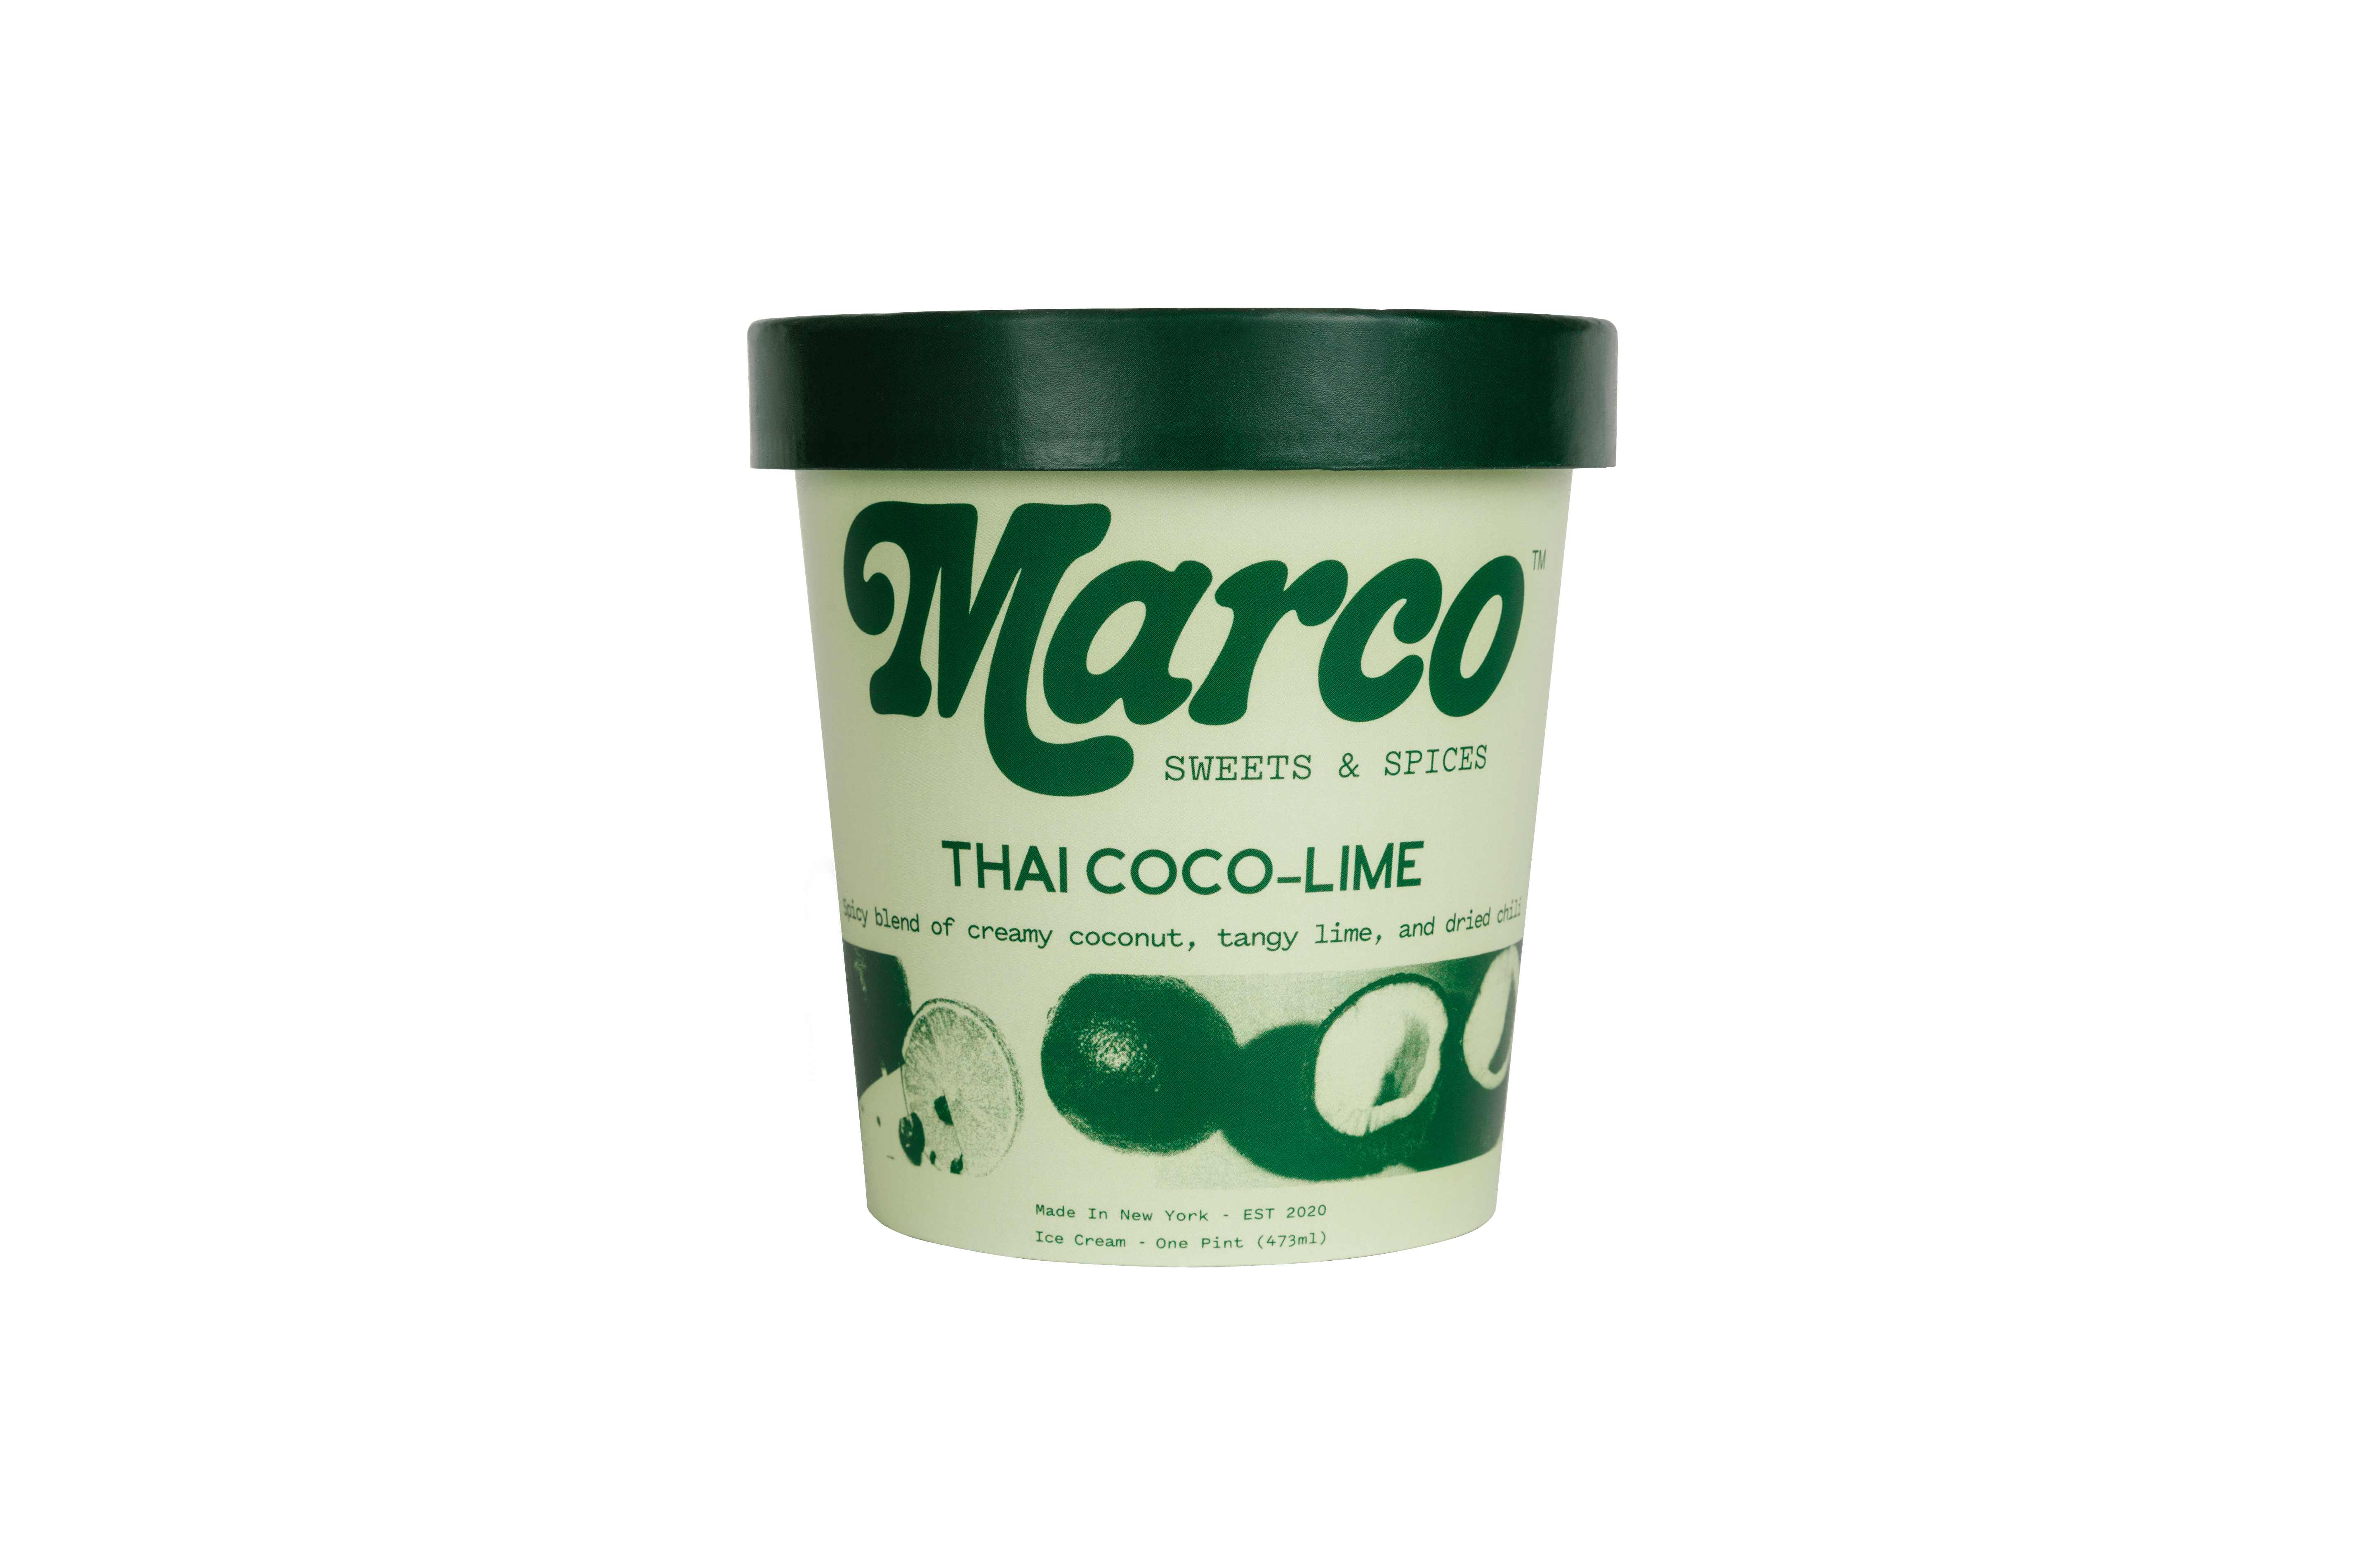 Marco Sweets Thai Coco Lime Ice Cream Pint 8 units per case 16.0 oz